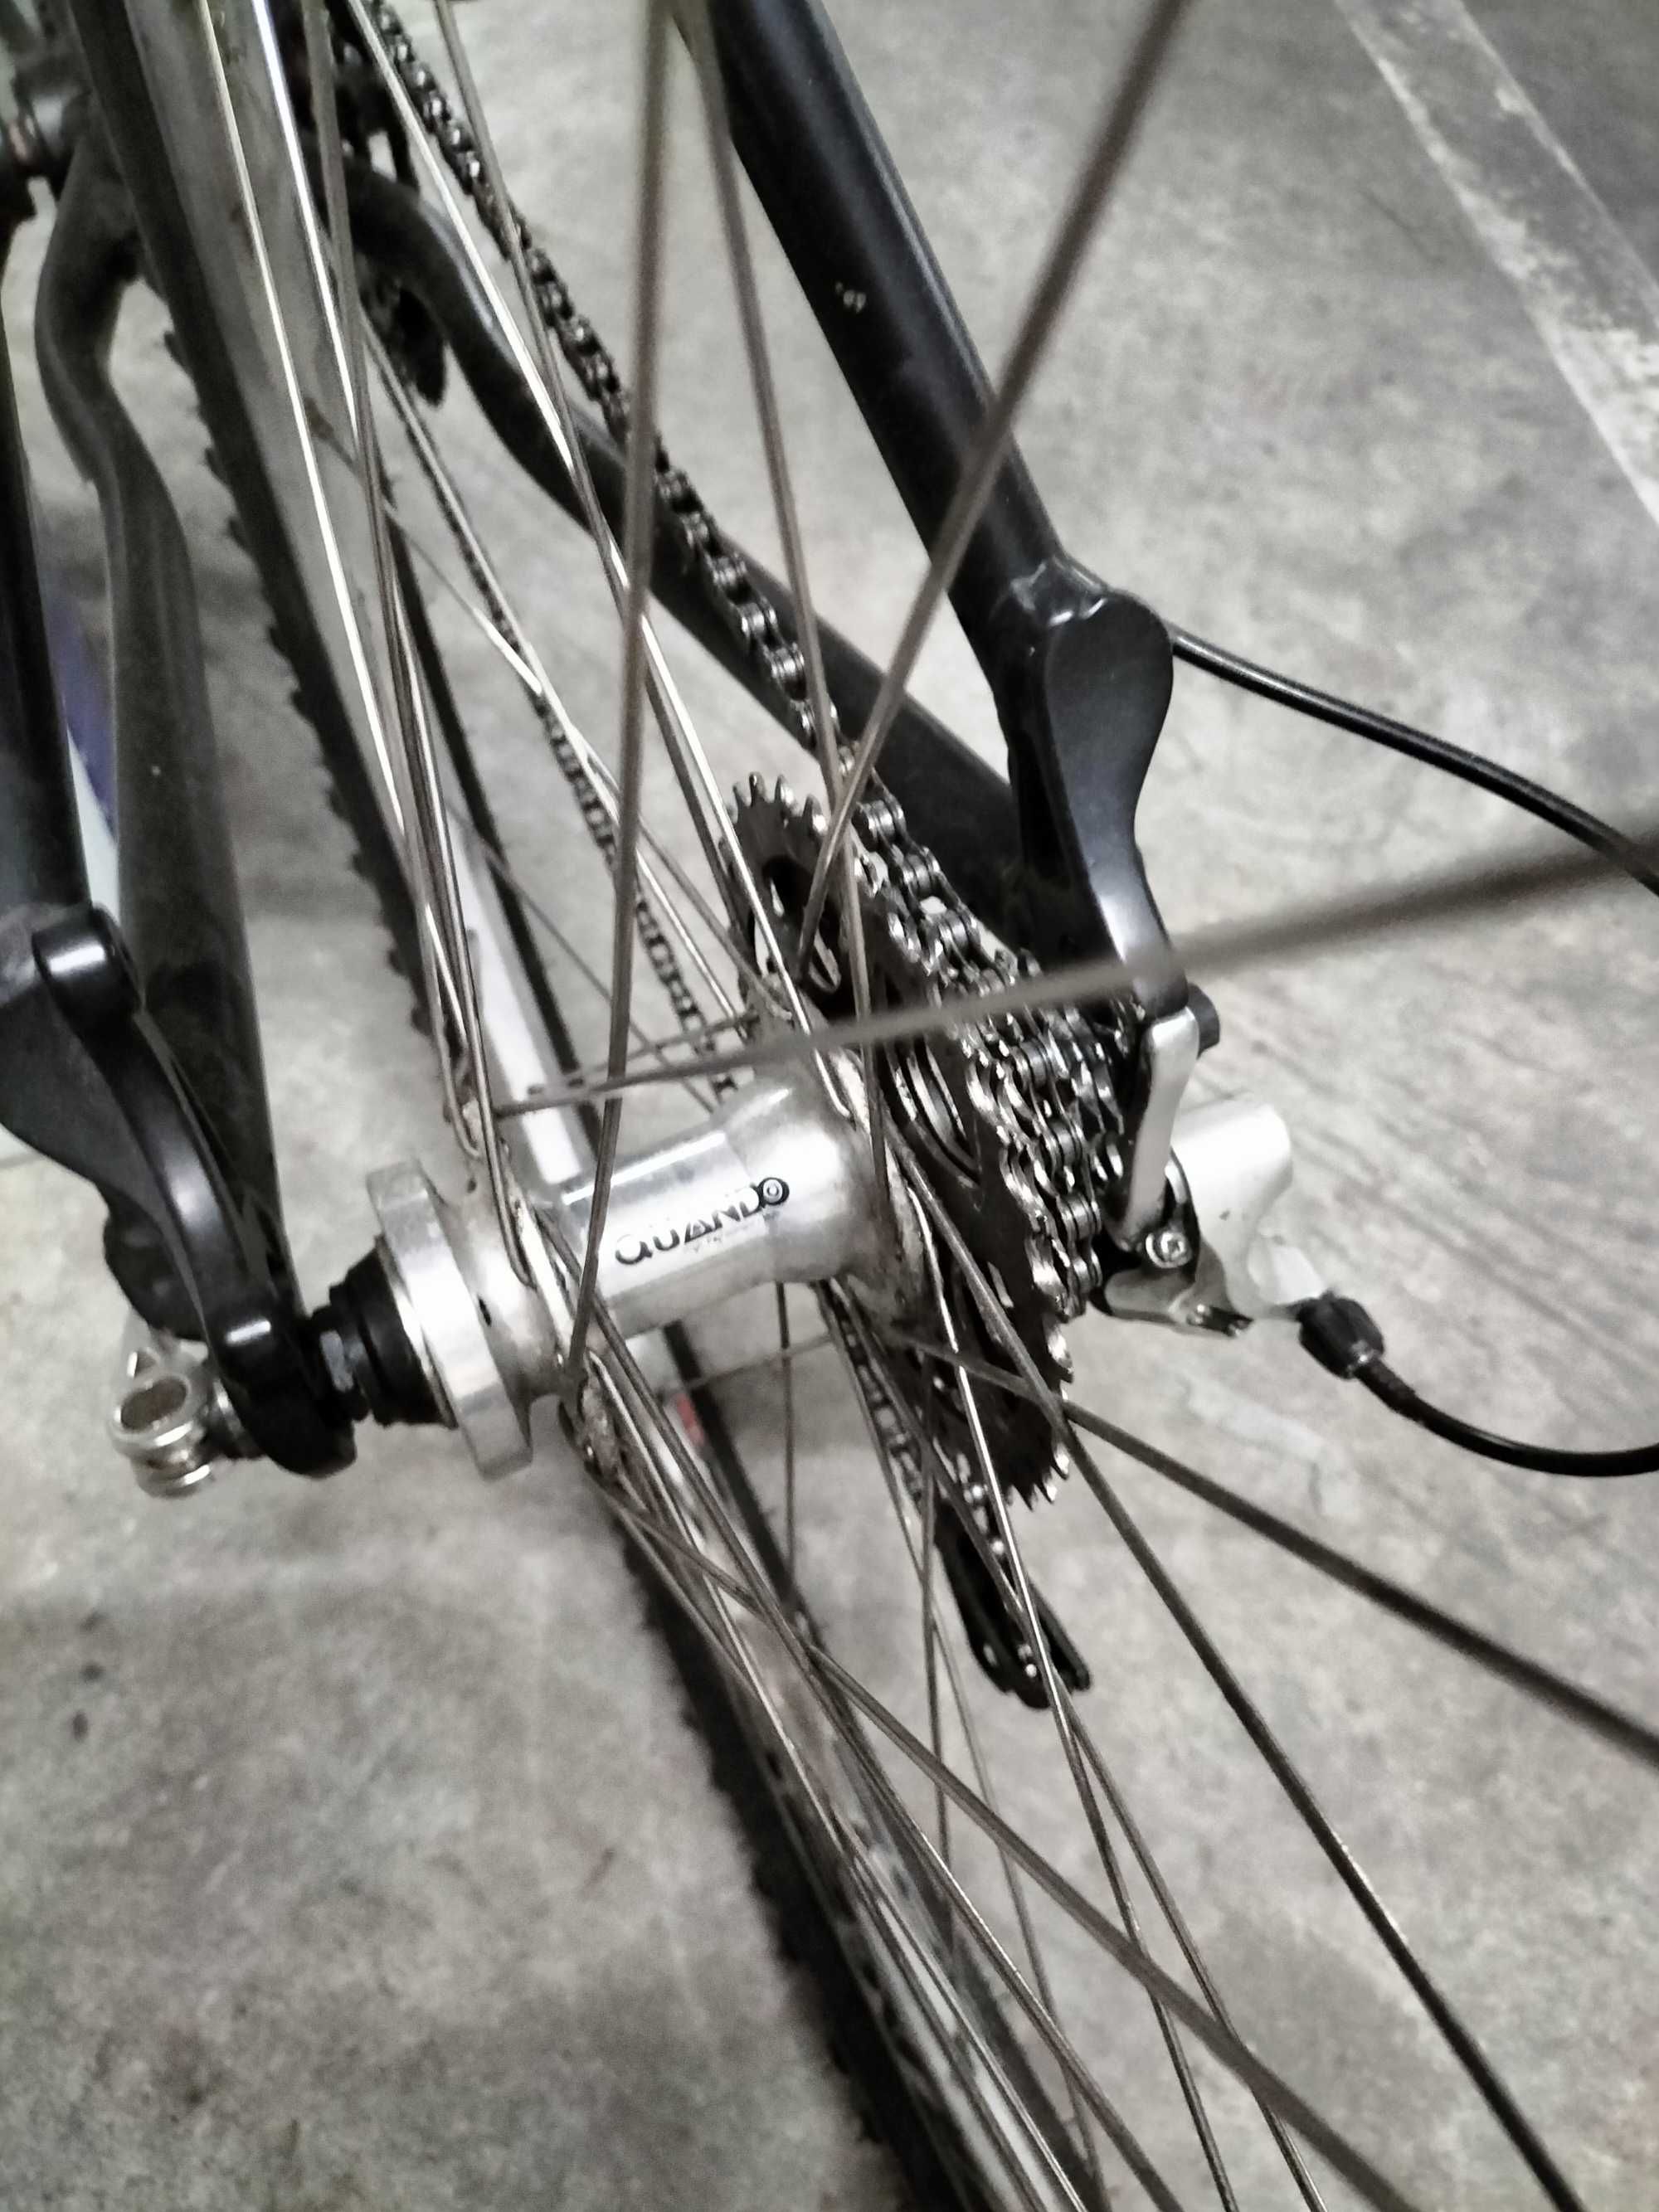 Bicicleta Berg X-Pro tamanho L